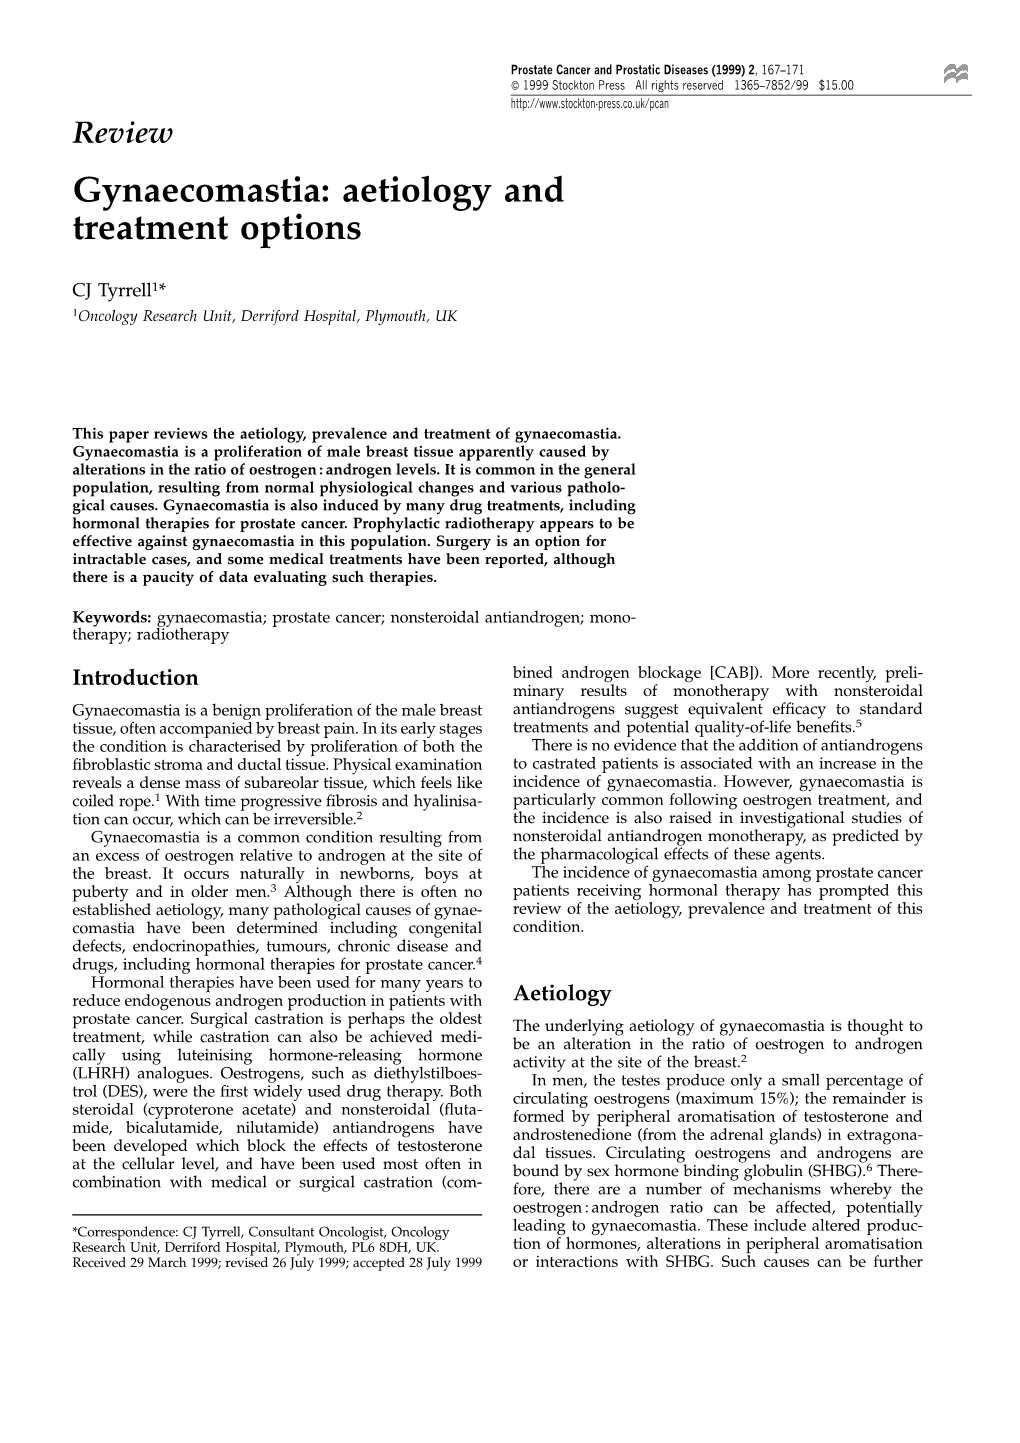 Gynaecomastia: Aetiology and Treatment Options